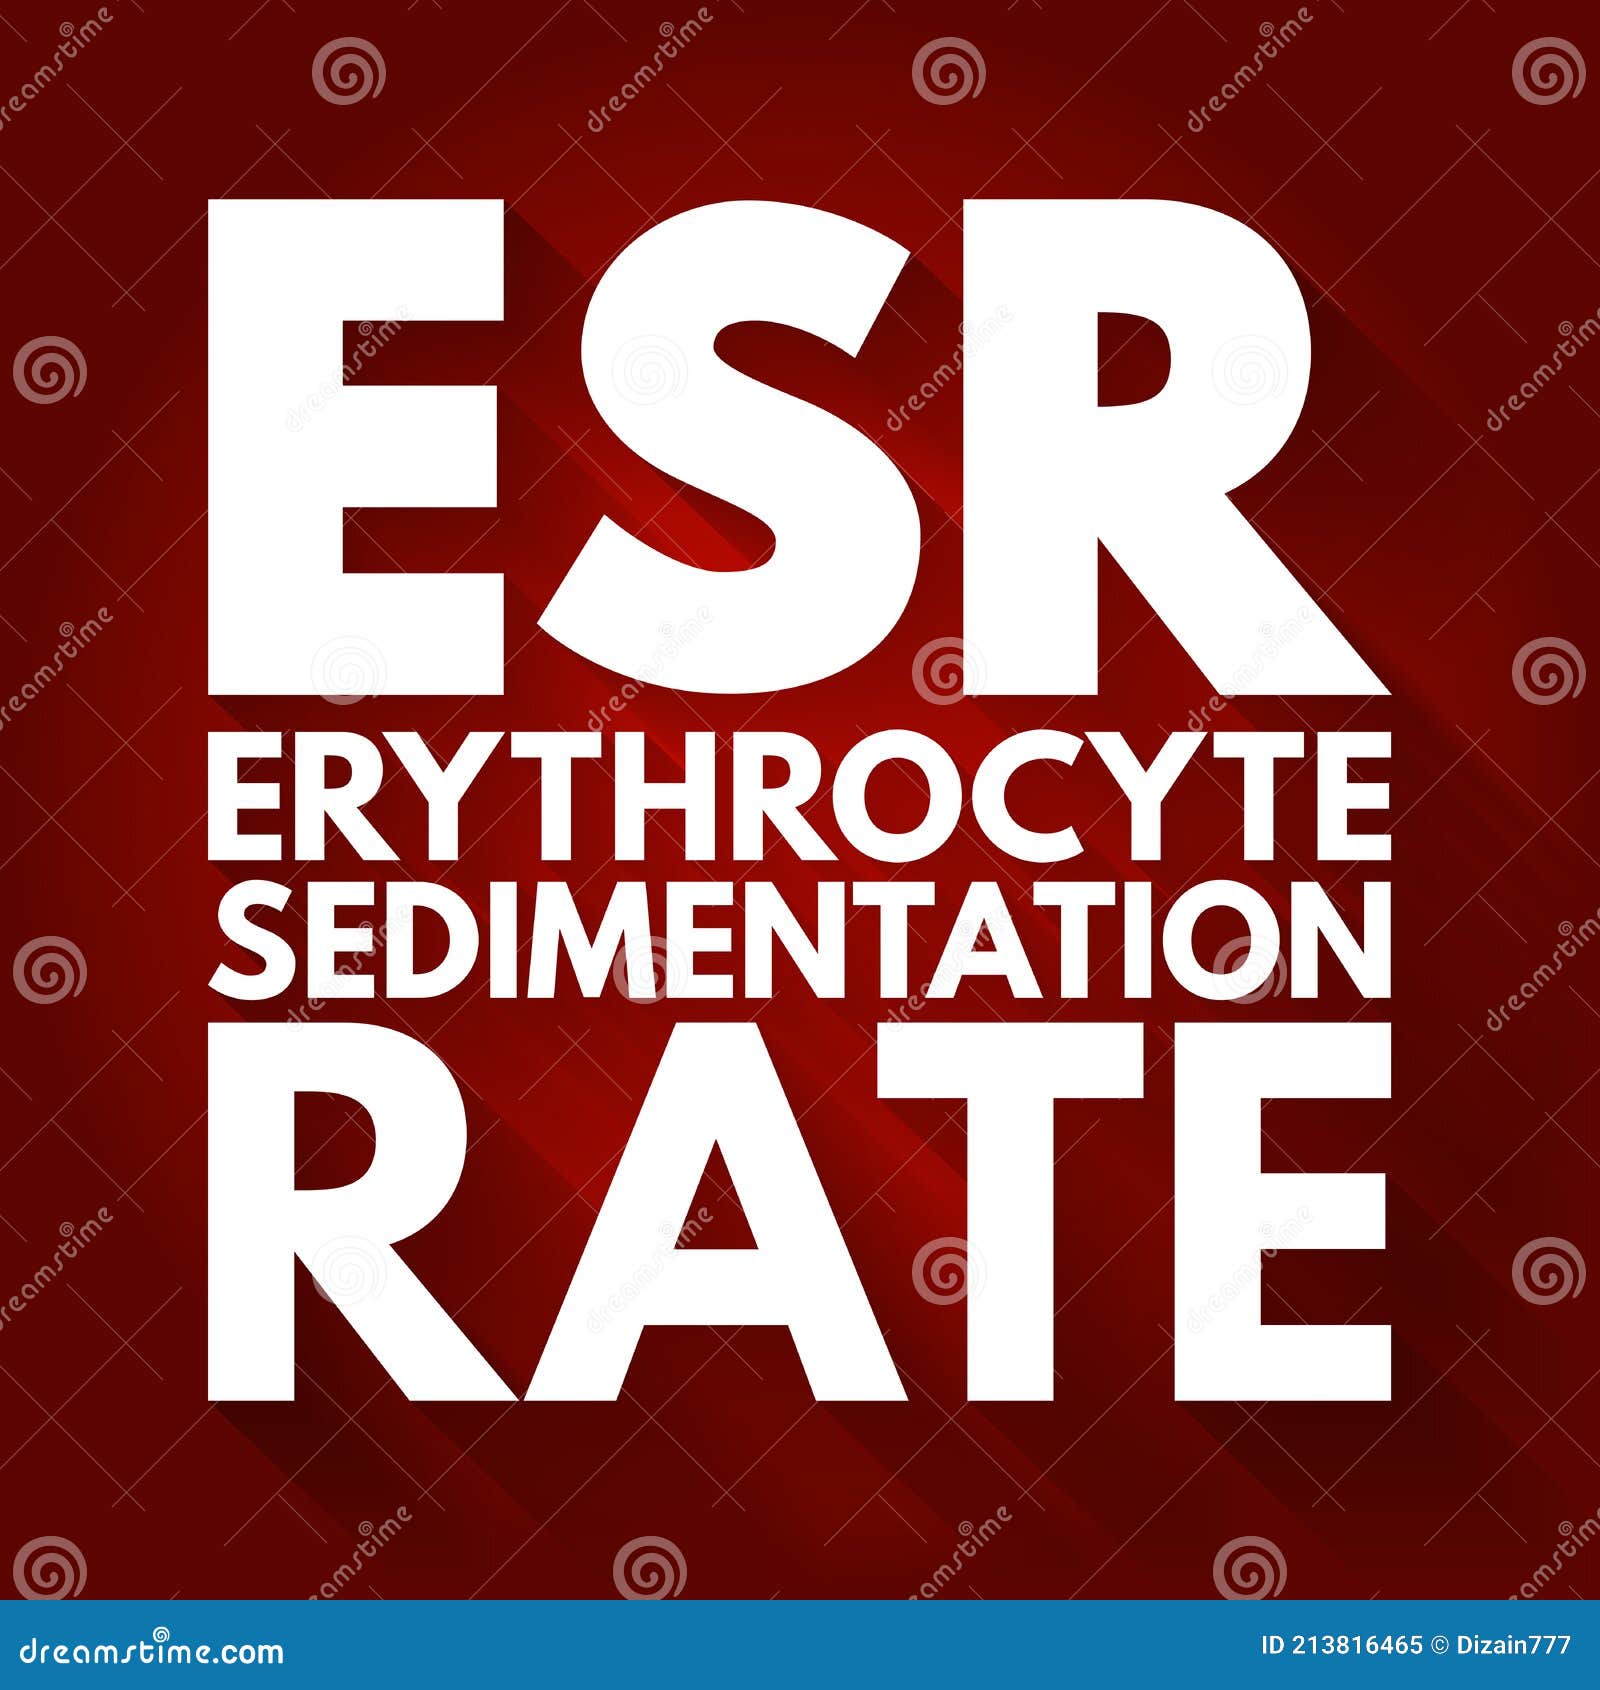 ESR (Erytrorocyte Sedimentation rate)